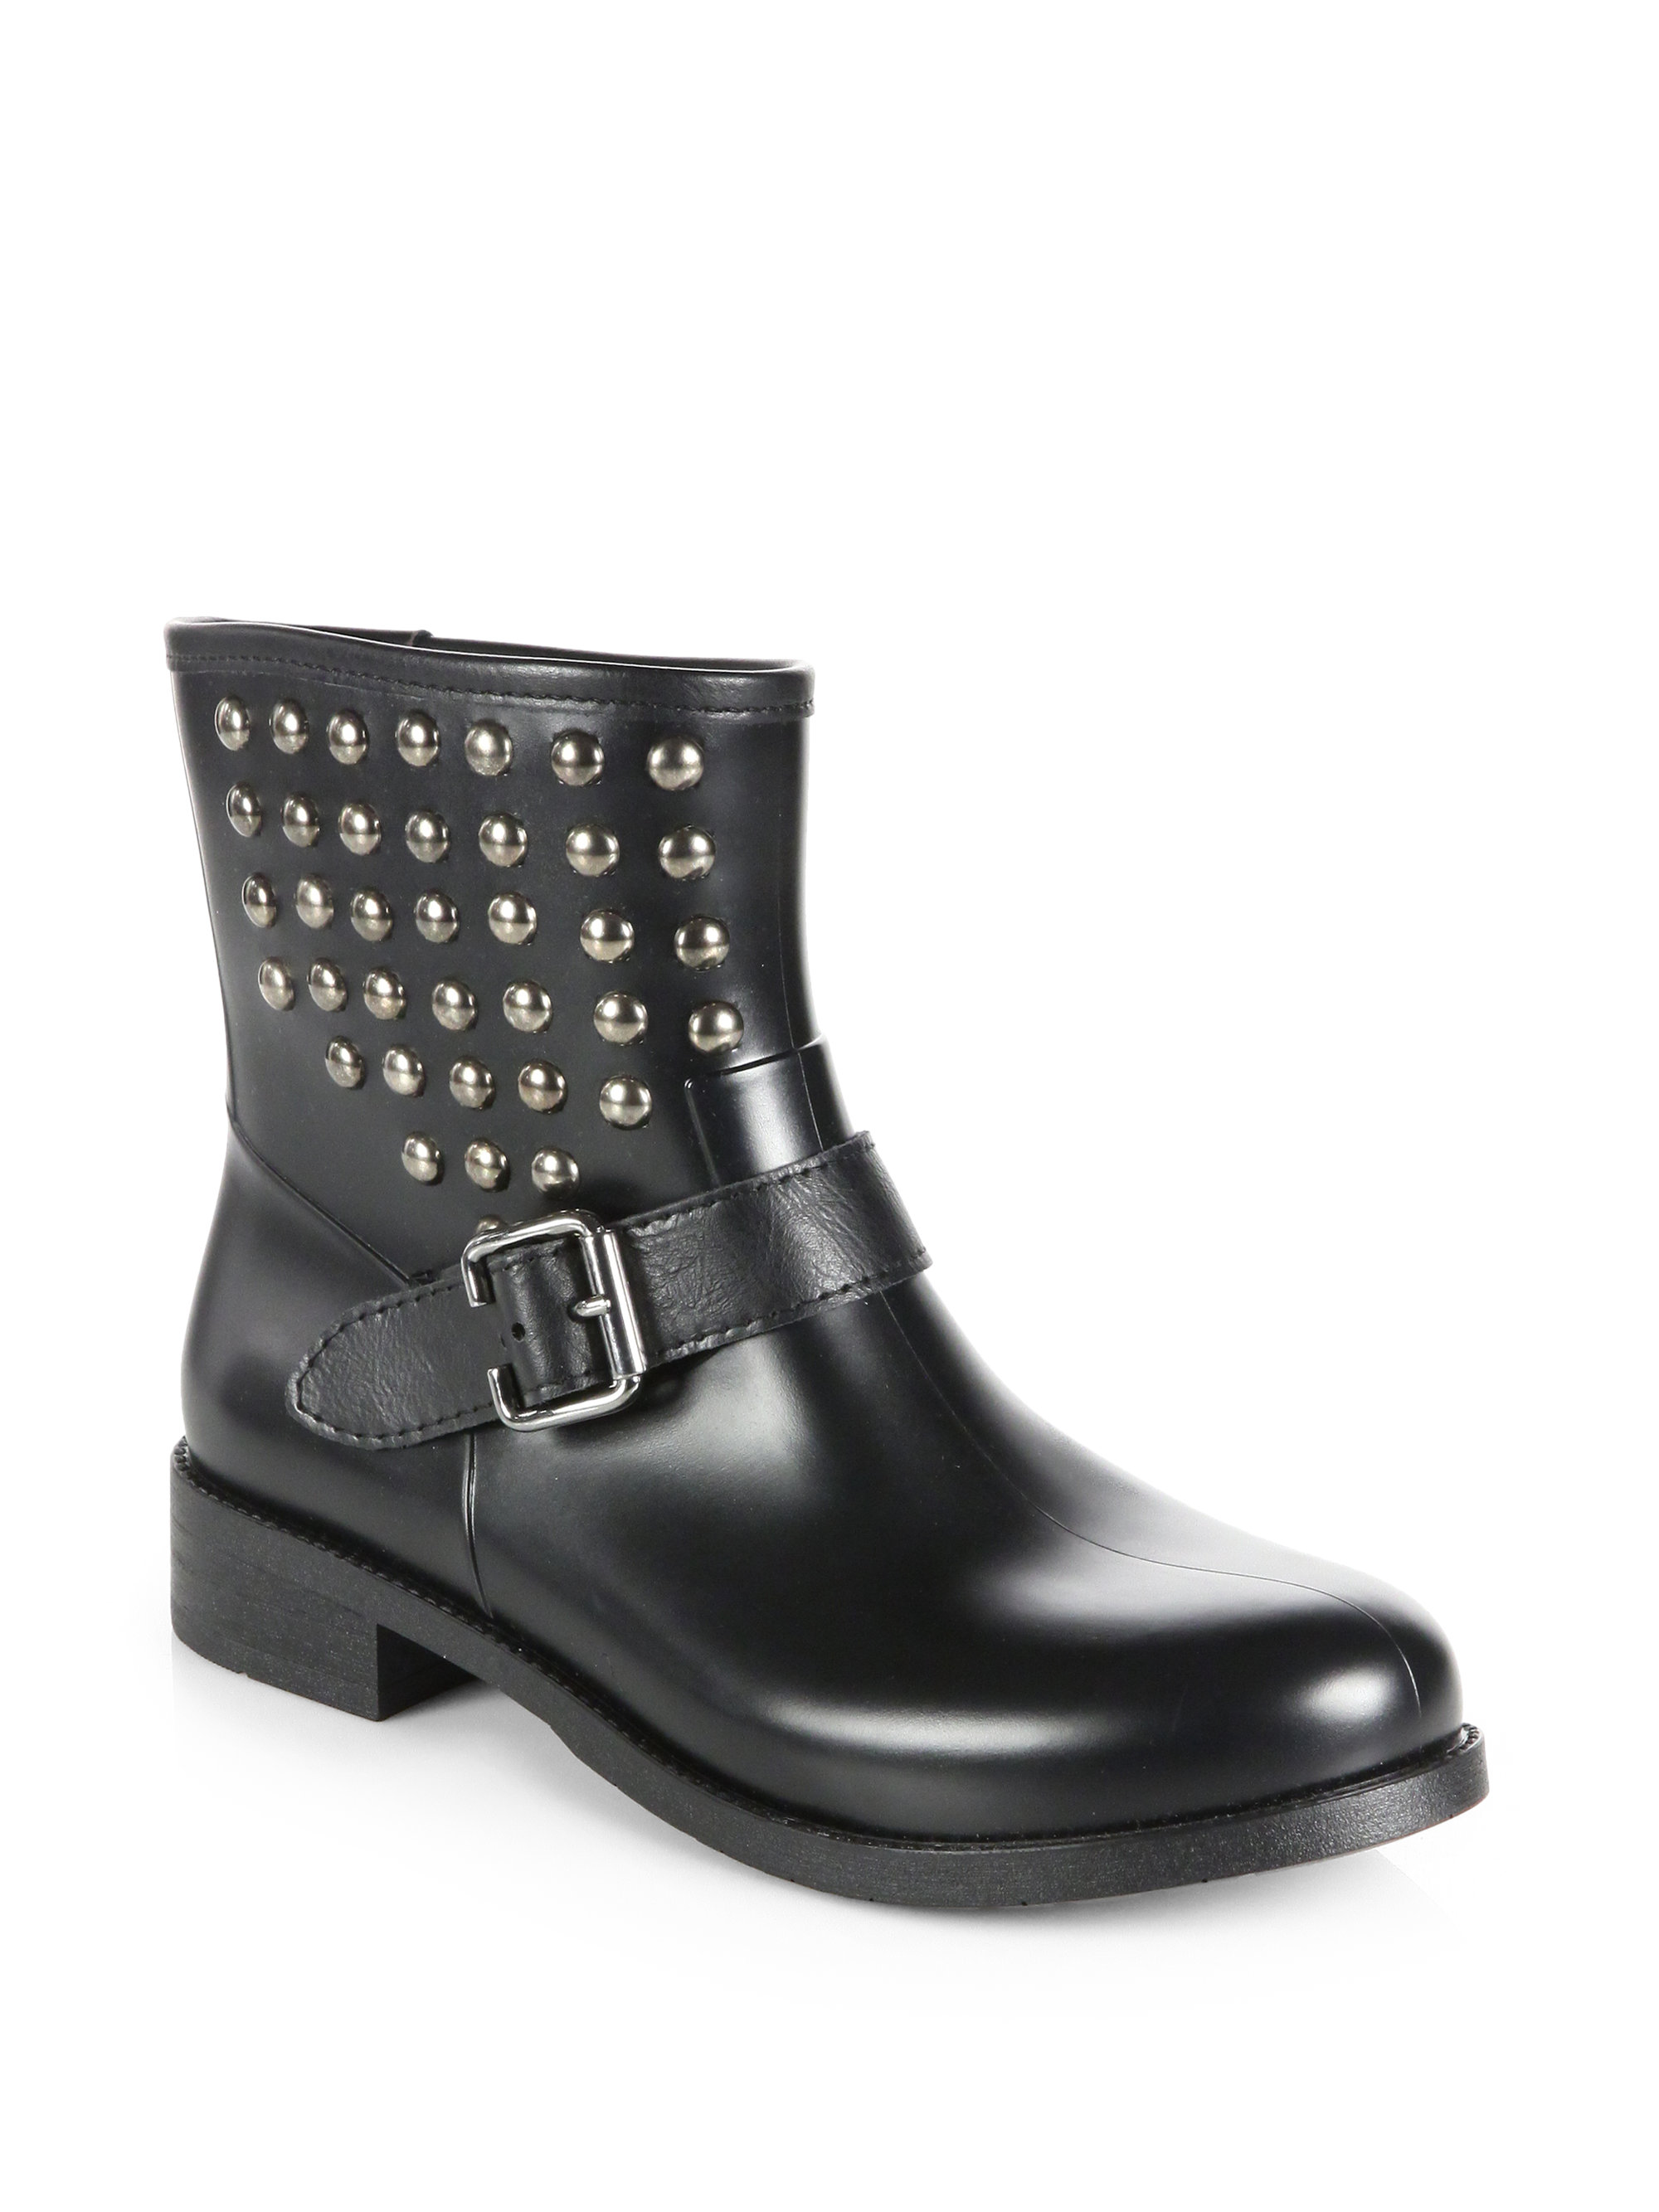 Pollini Studded Rubber Rain Boots in (BLACK) | Lyst